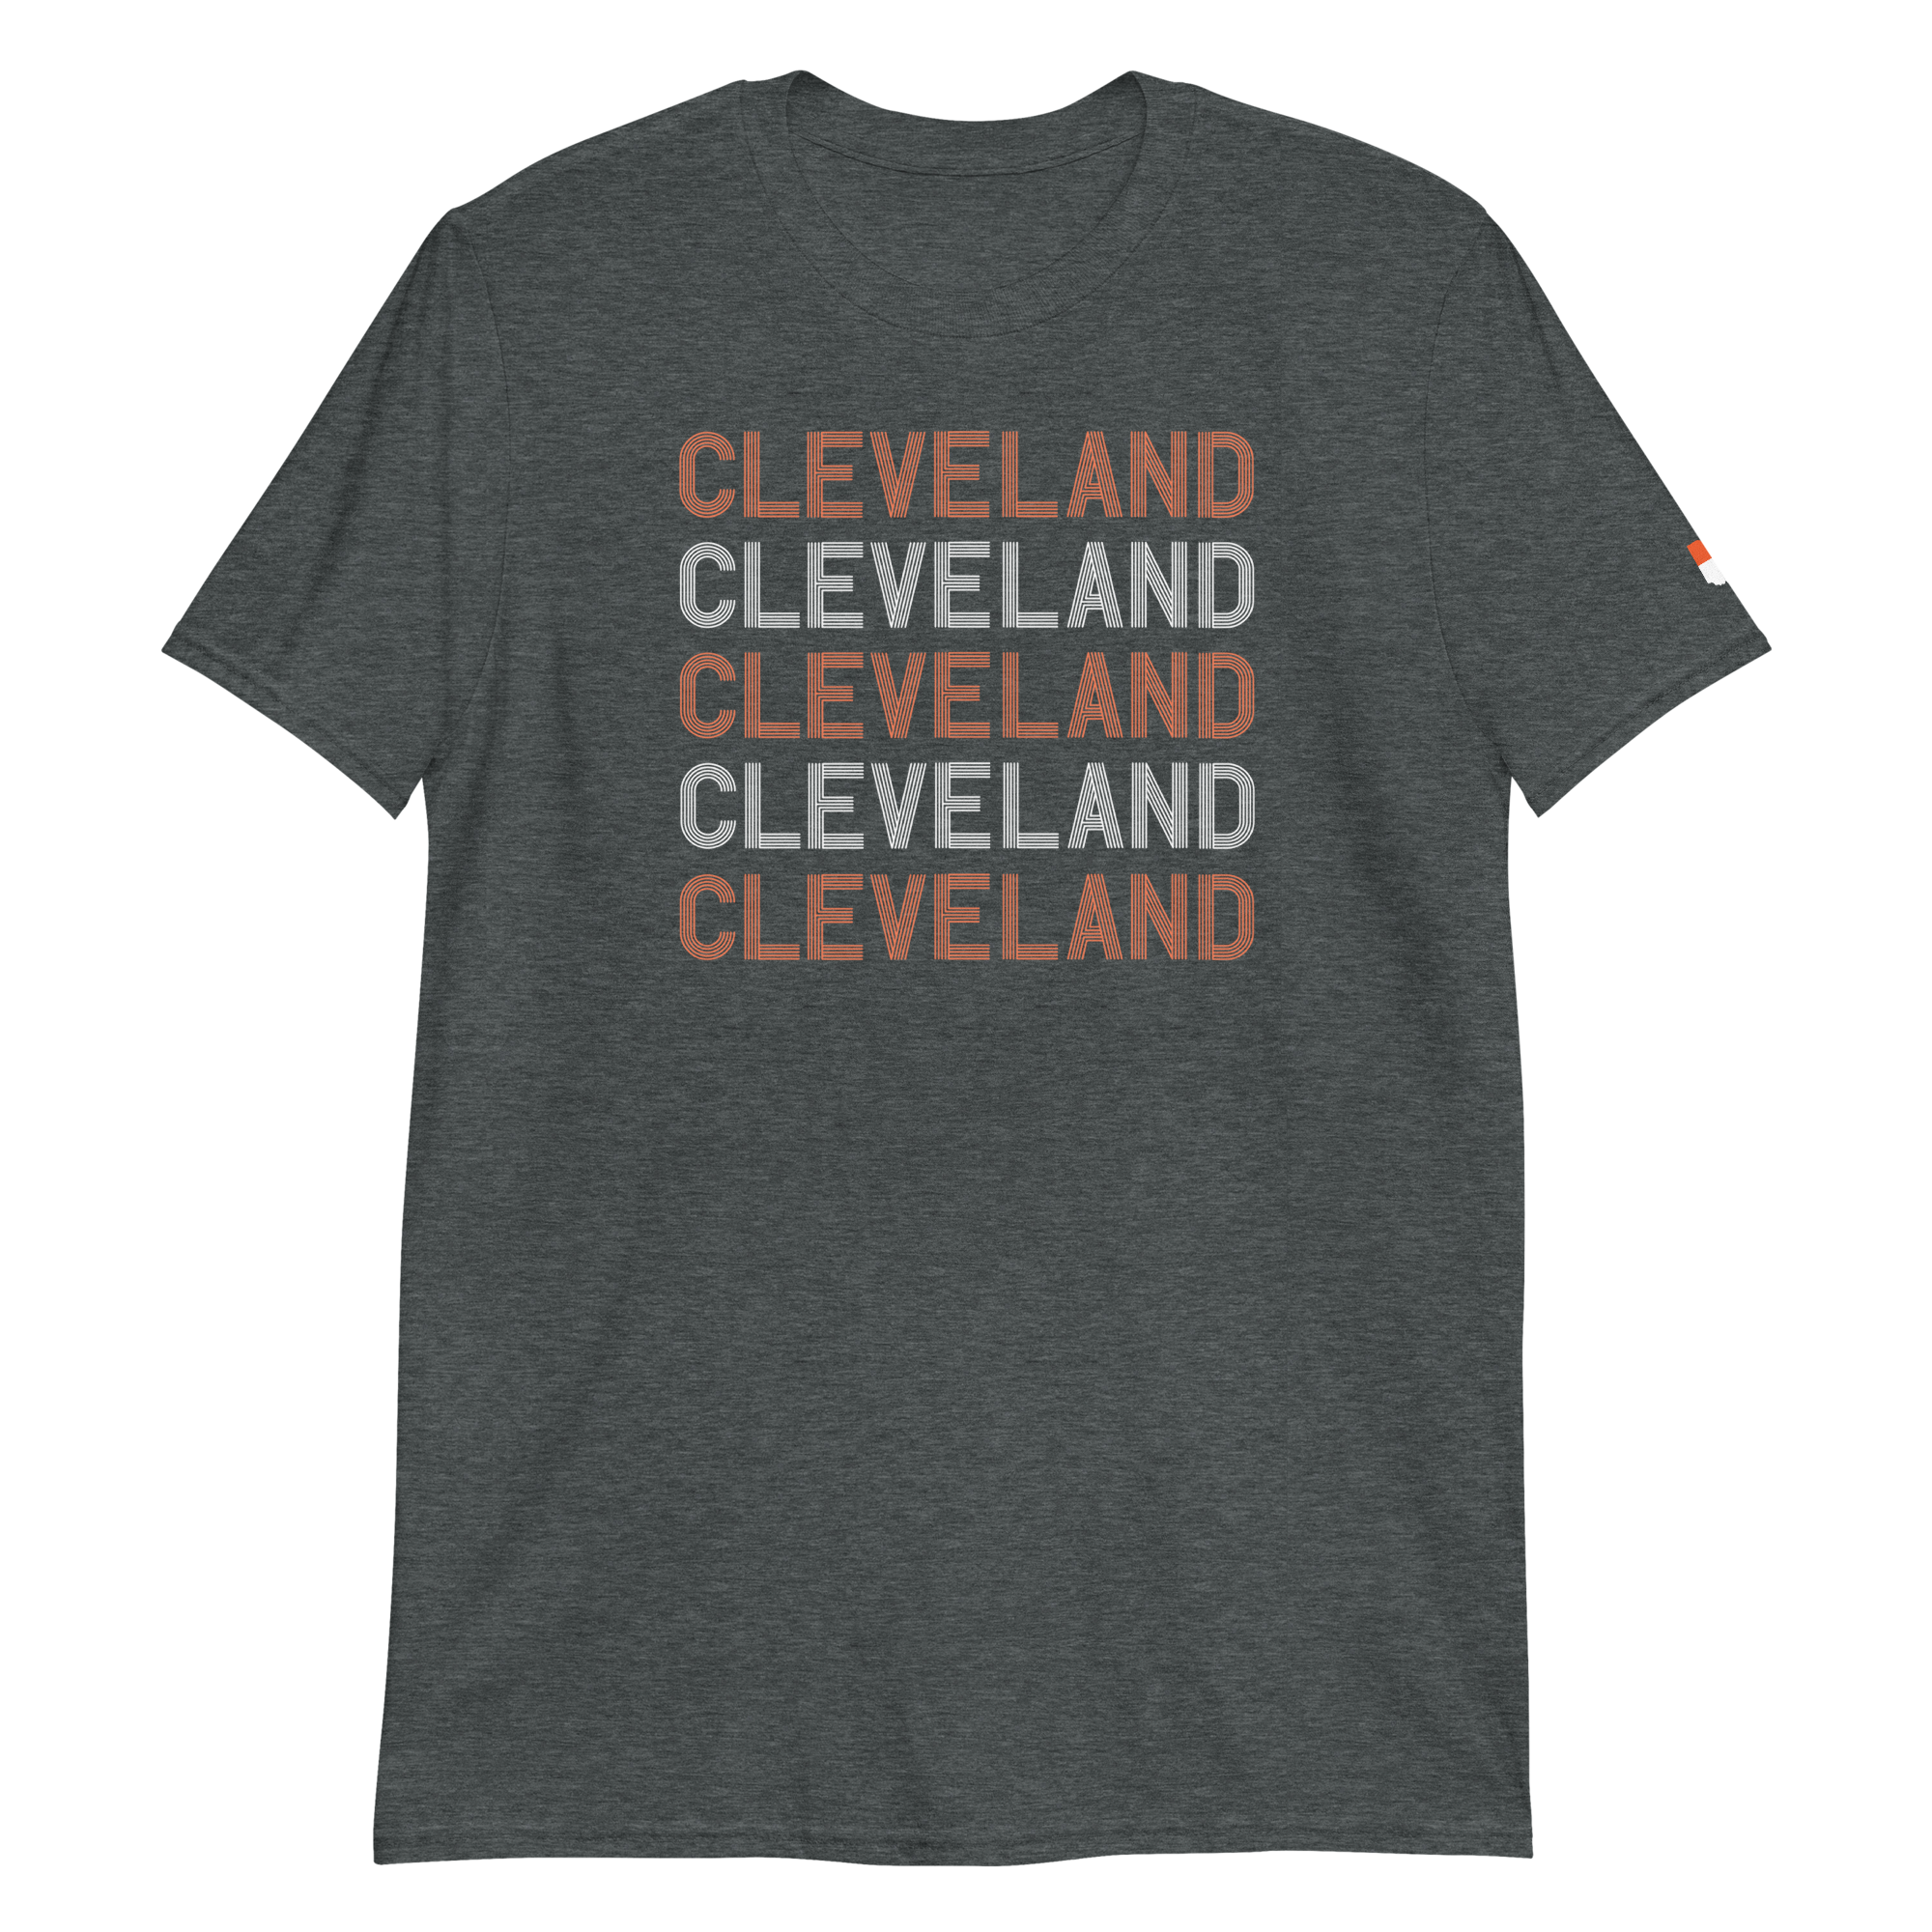 5 Cleveland